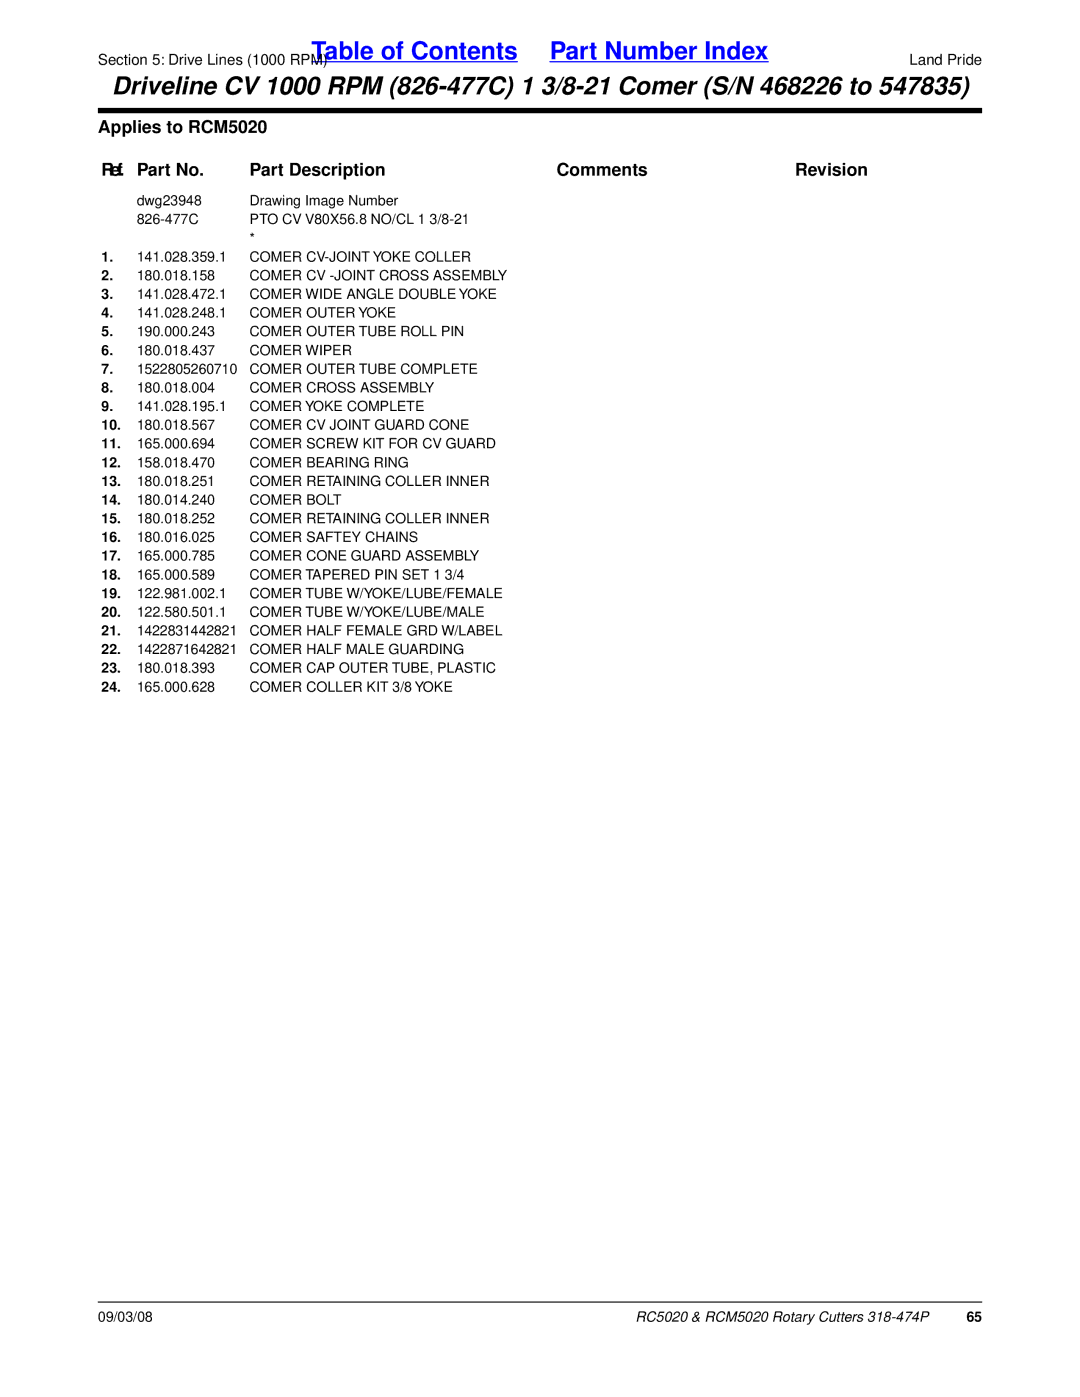 Land Pride RC5020 manual 17 .000.785 Comer Cone Guard Assembly, 19 .981.002.1 Comer Tube W/YOKE/LUBE/FEMALE 